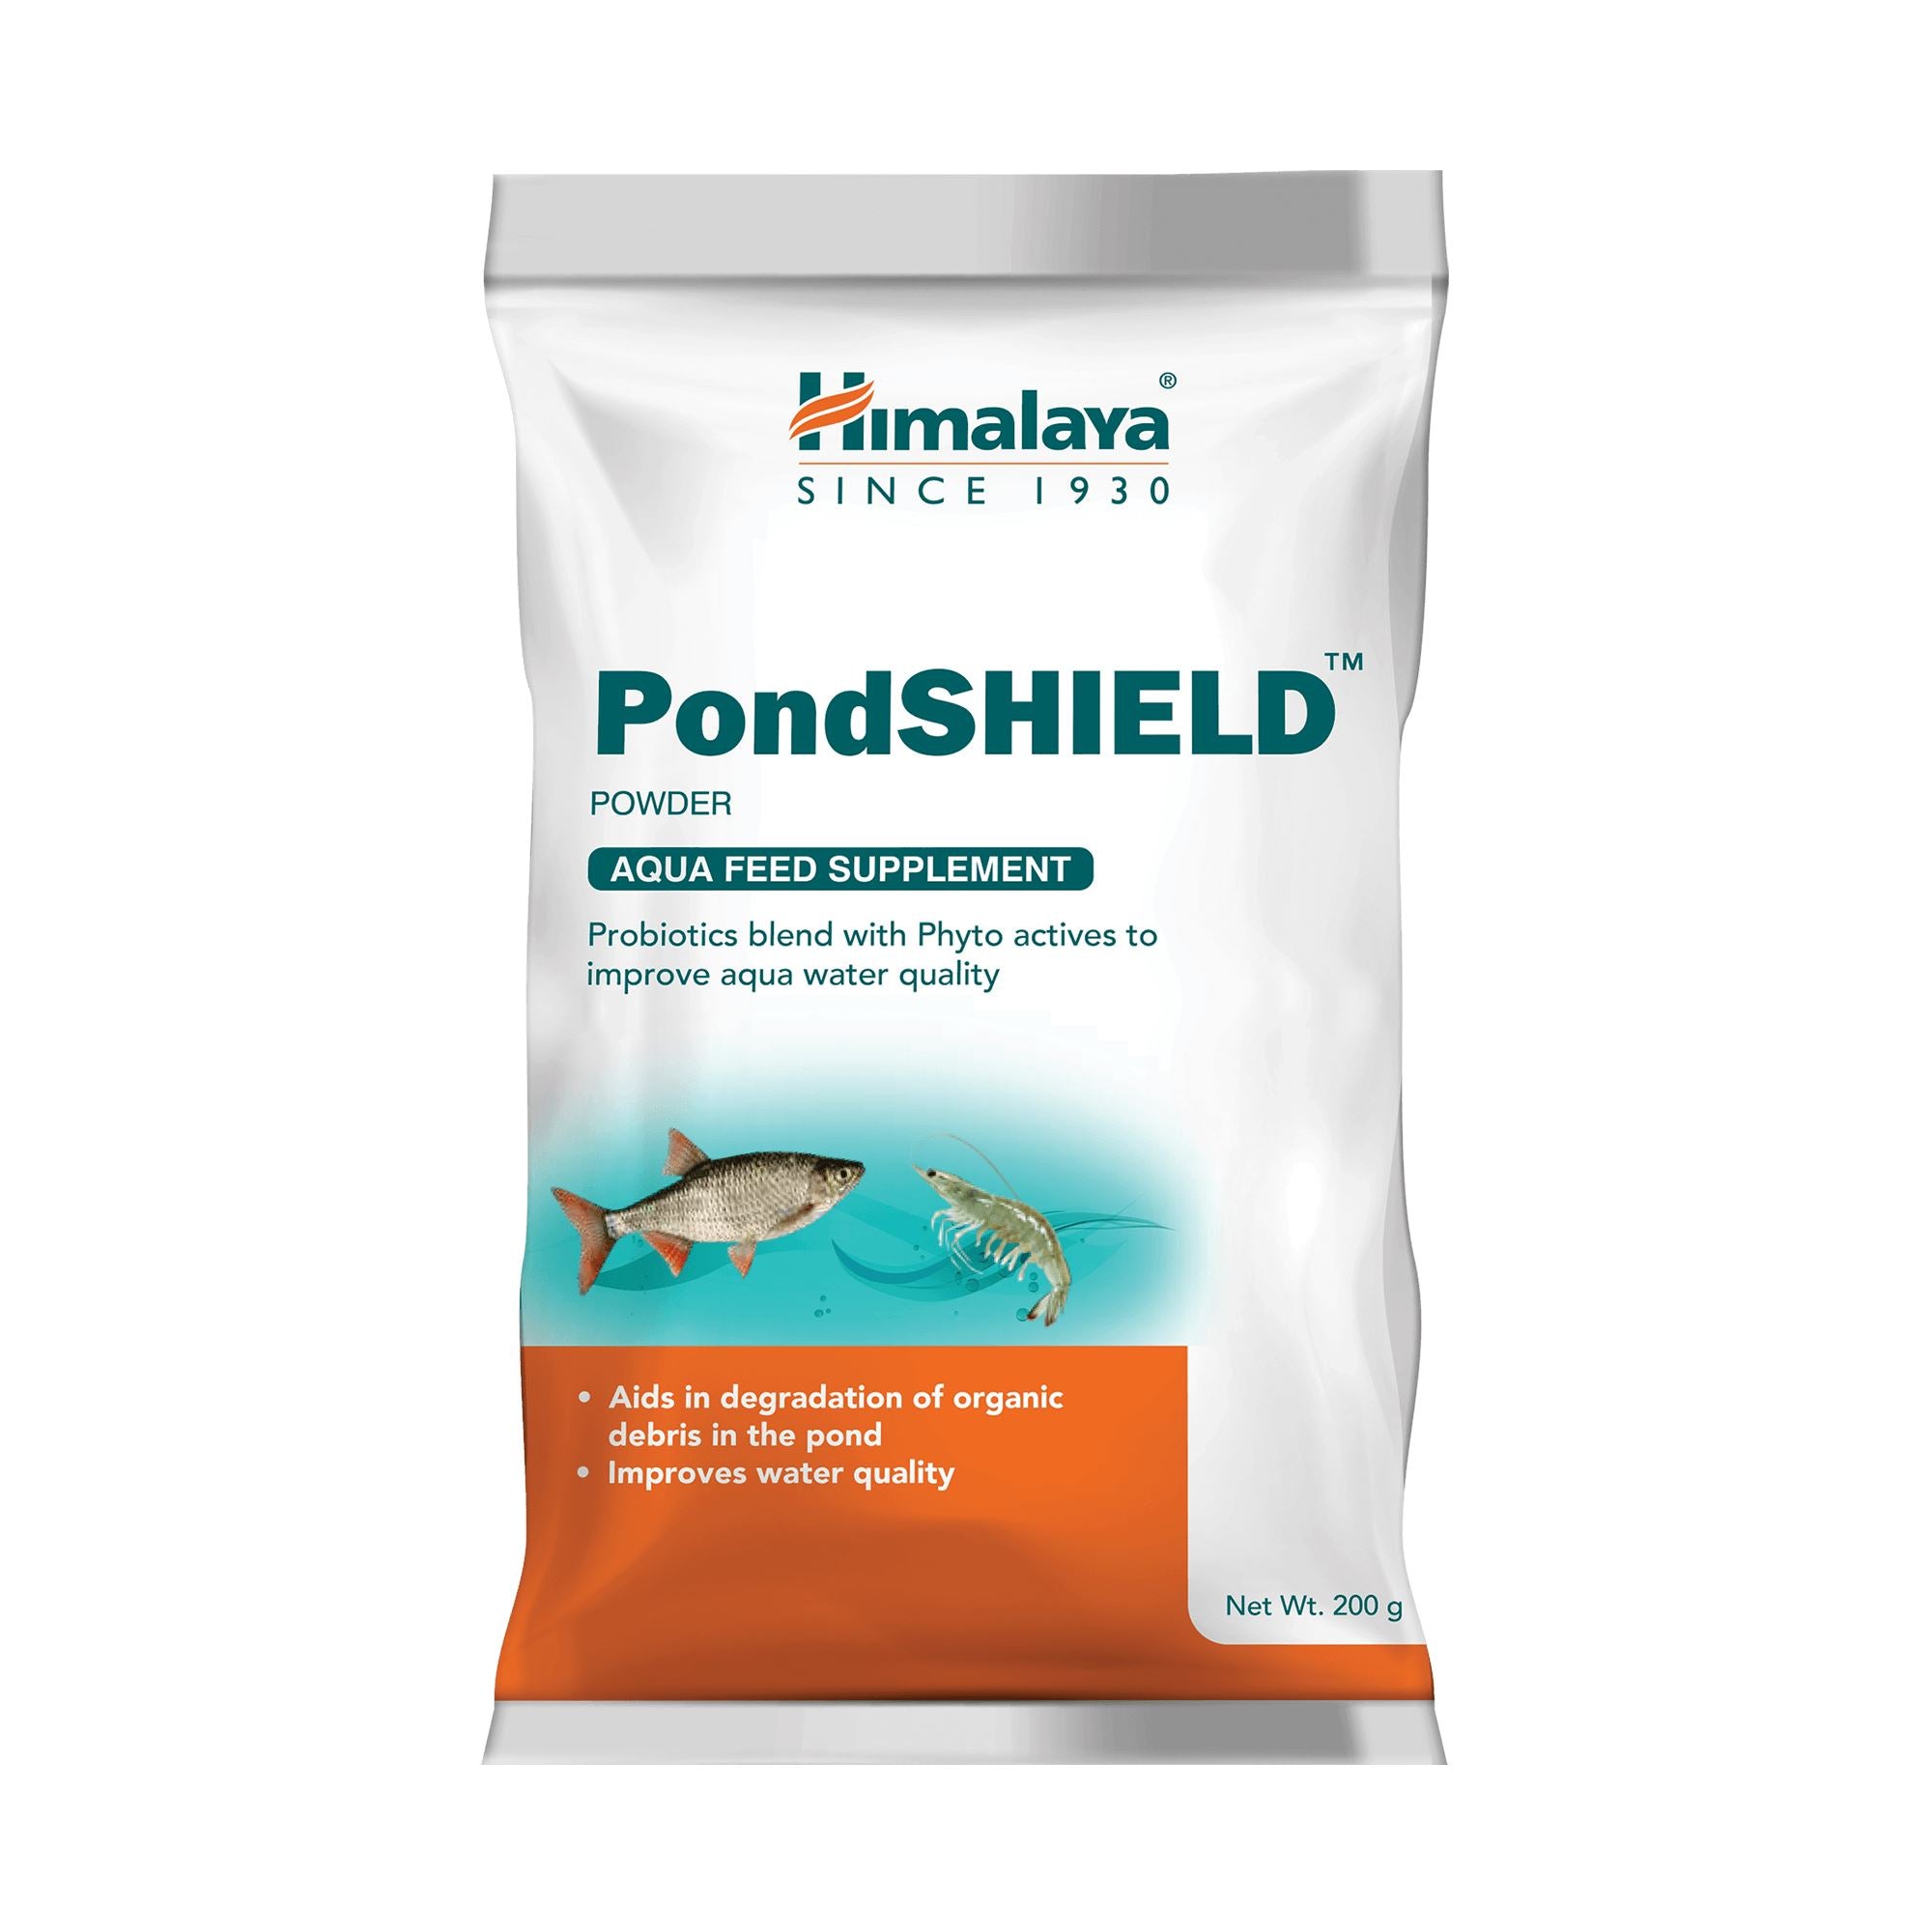 PondSHIELDTM POWDER - Aqua Feed Supplement